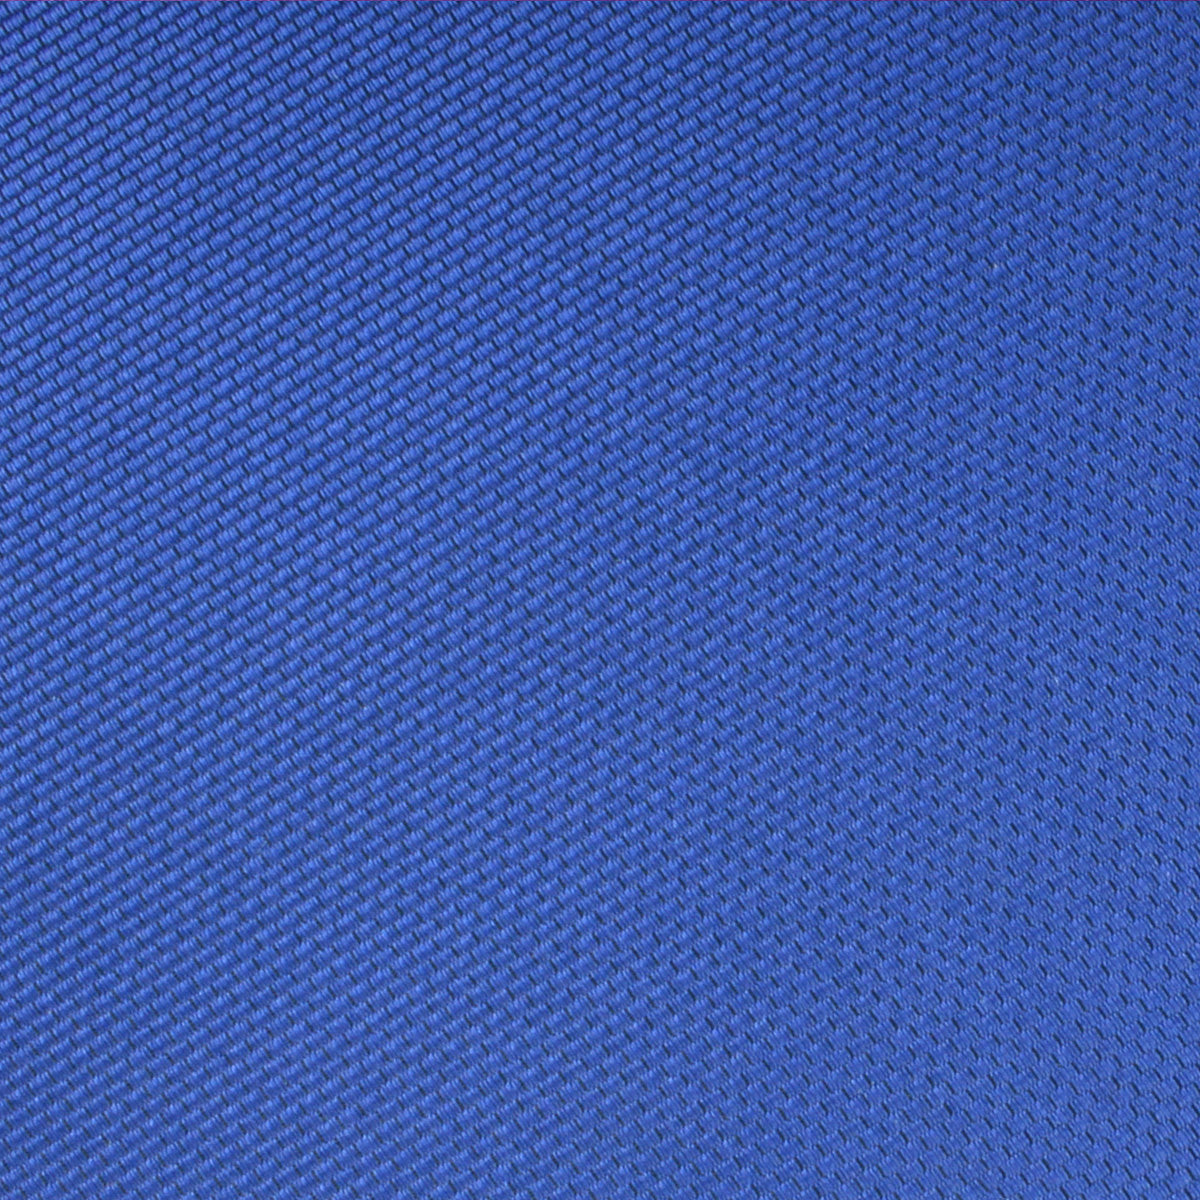 Horizon Blue Weave Pocket Square Fabric